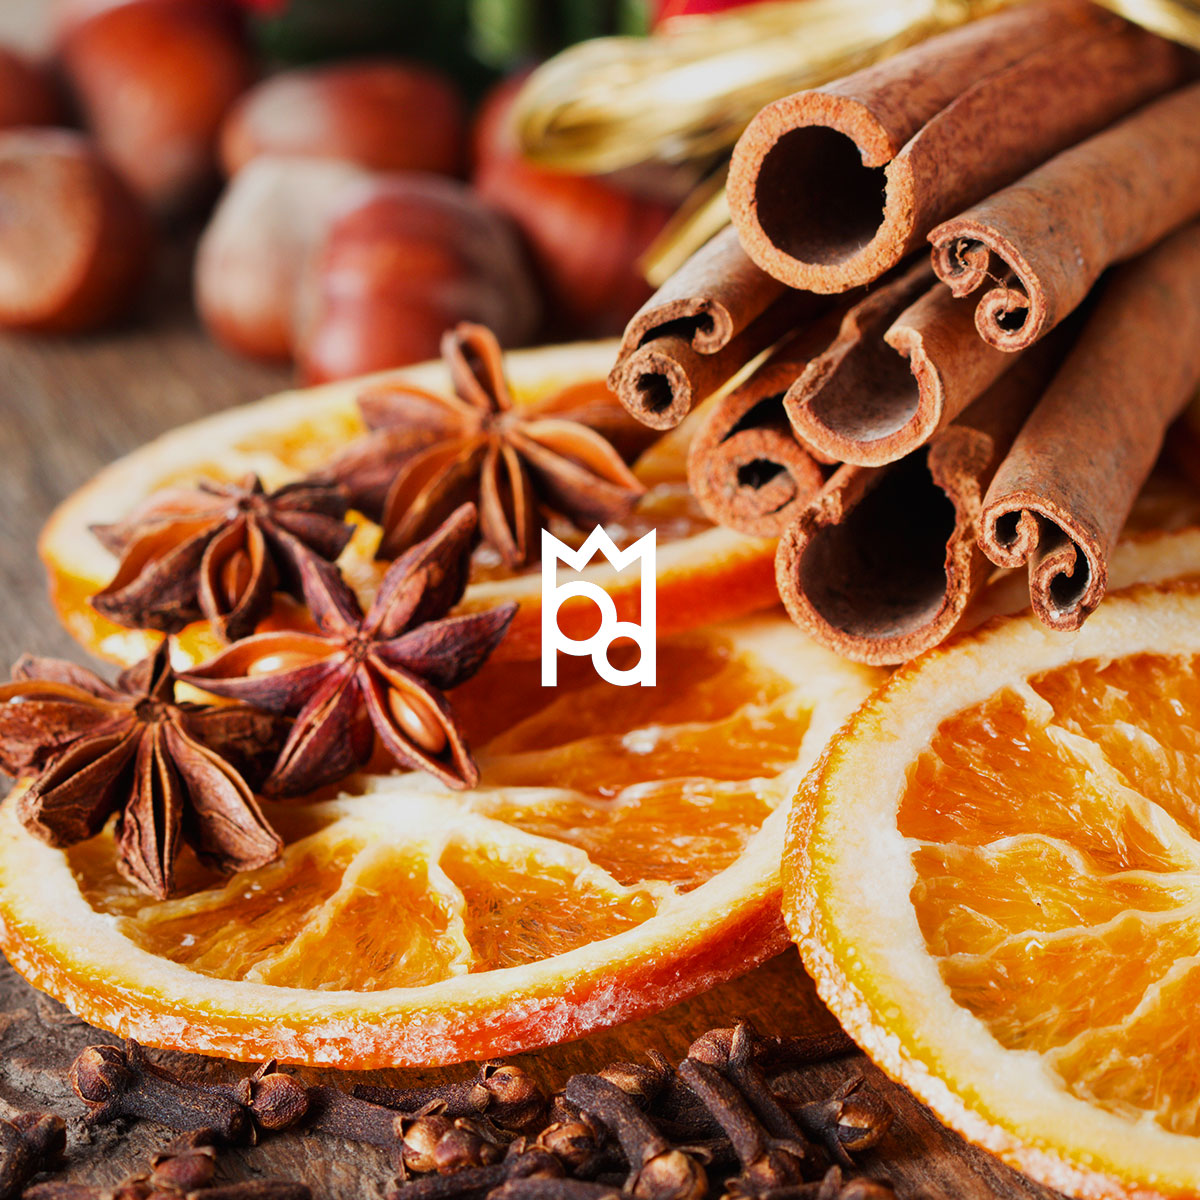 Cinnamon Orange Clove Essential Oil Wax Melts